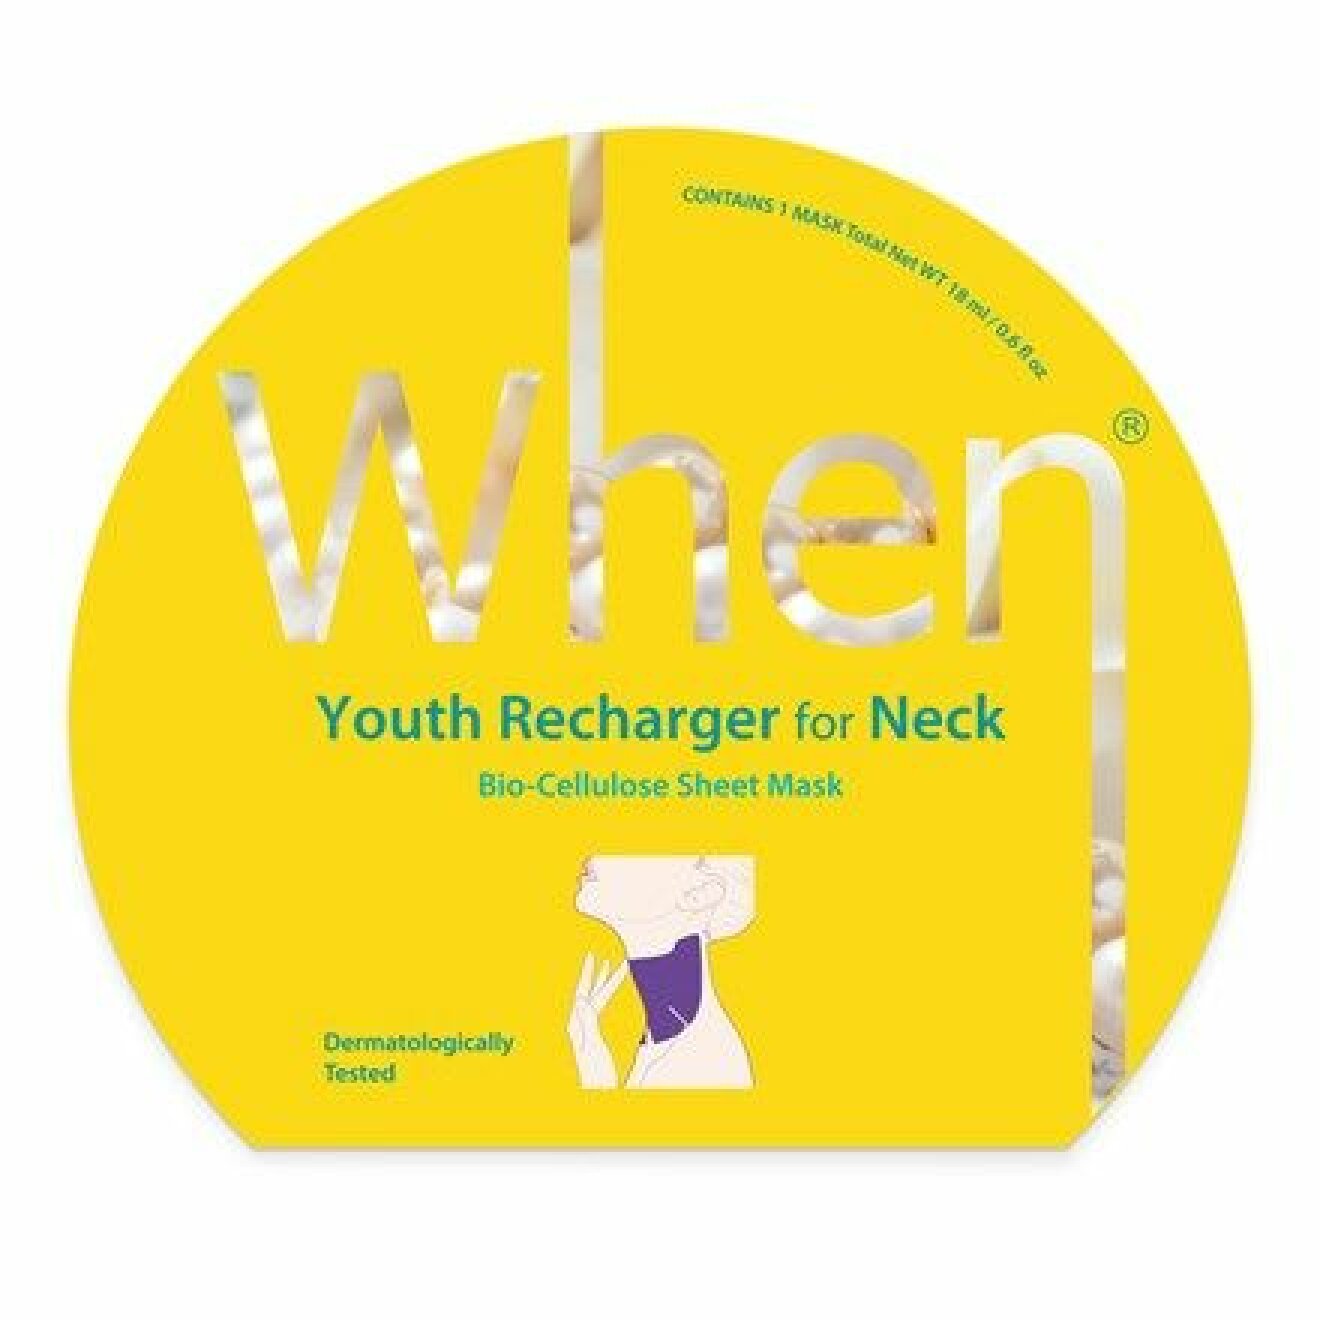 Youth recharger for neck bio cellulose sheet mask från märket When.